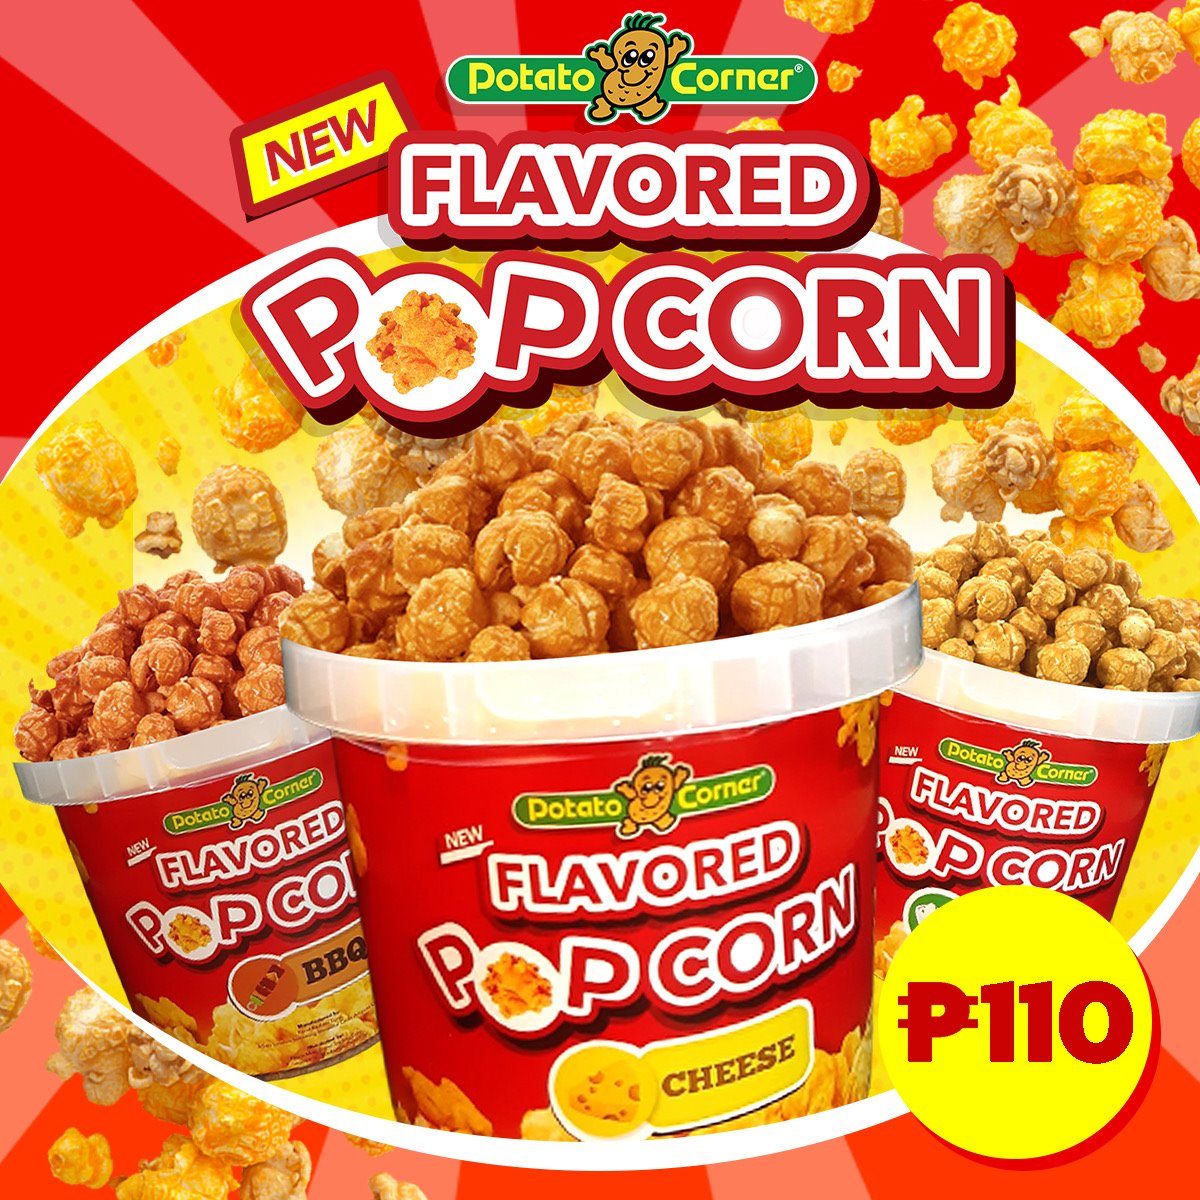 Potato Corner offers flavored caramelized popcorn